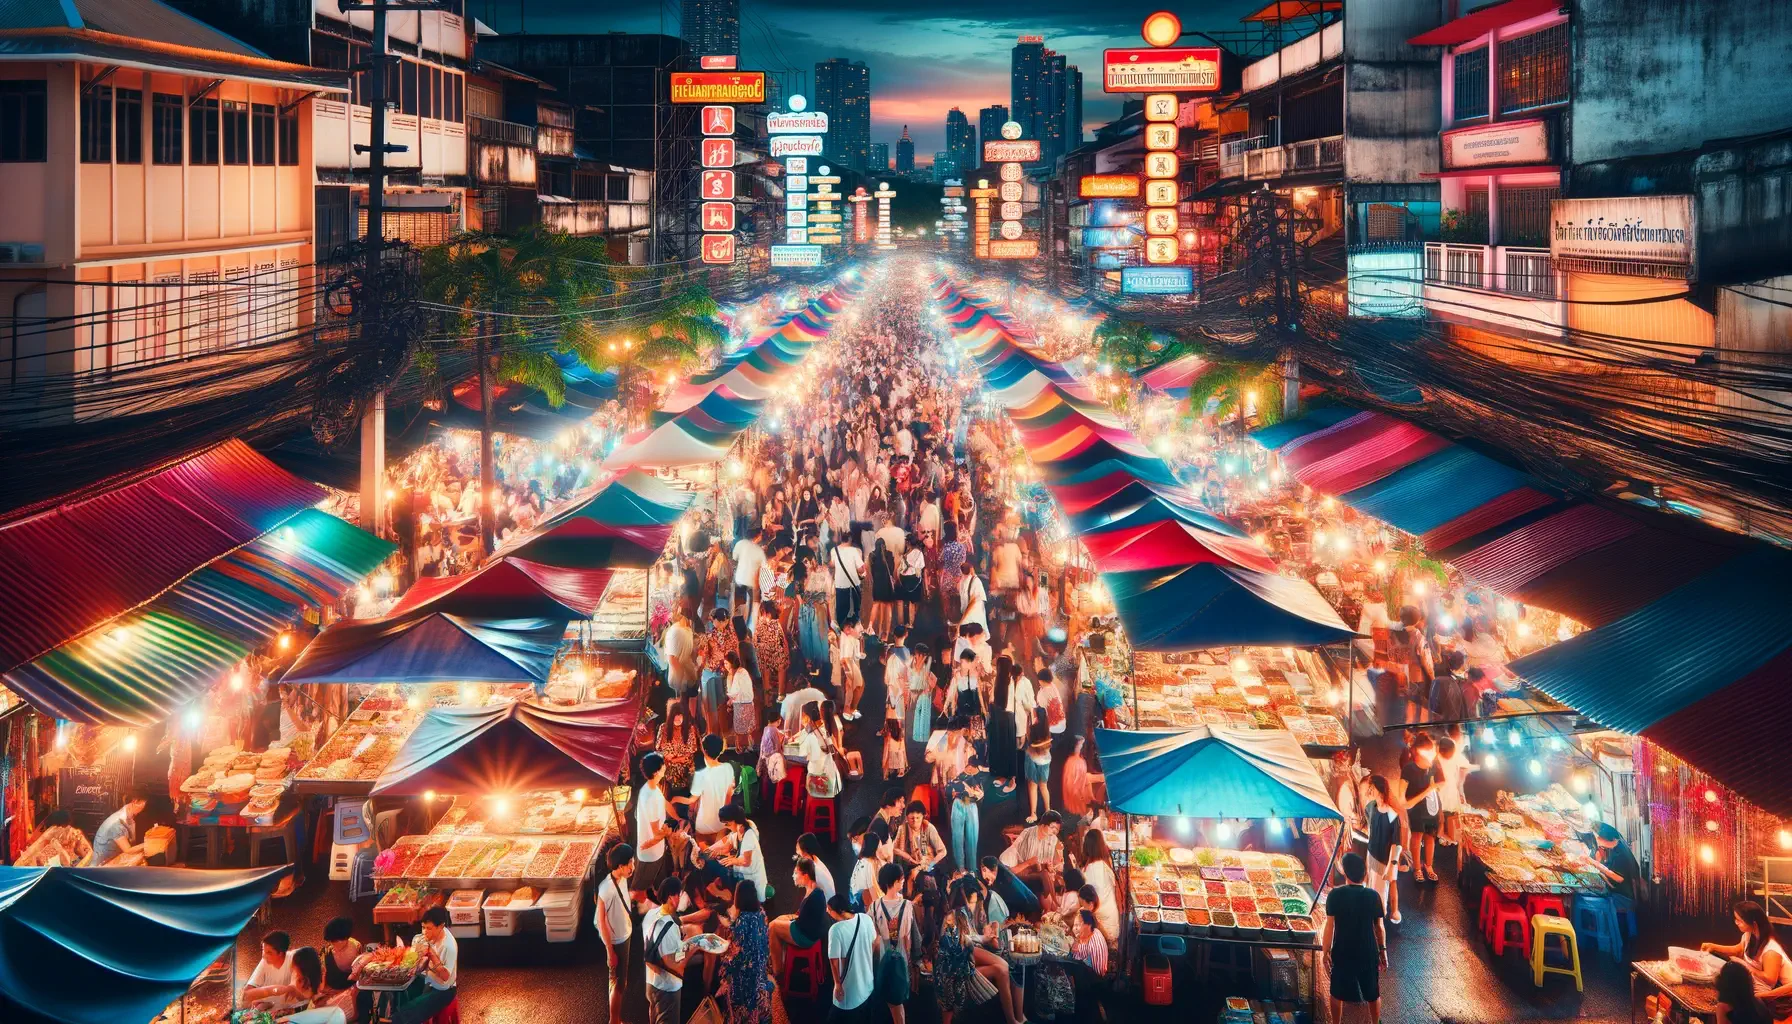 Travel AI Art Examples bustling night market in Bangkok